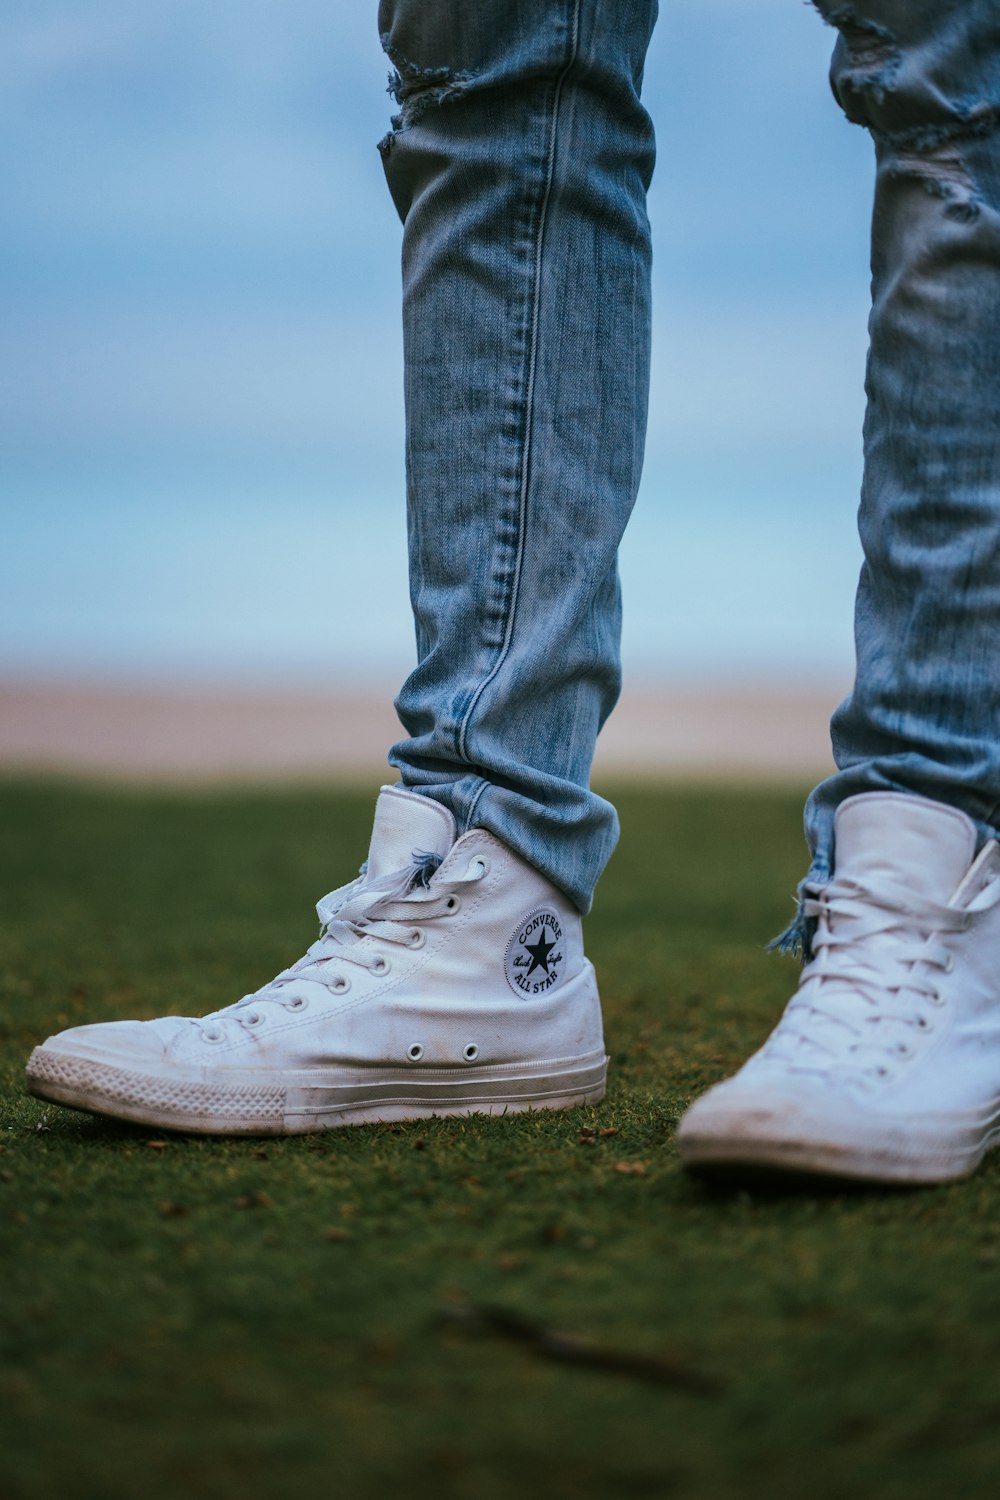 man wearing white Converse high-tops shoes photo – Free Usa Image on  Unsplash